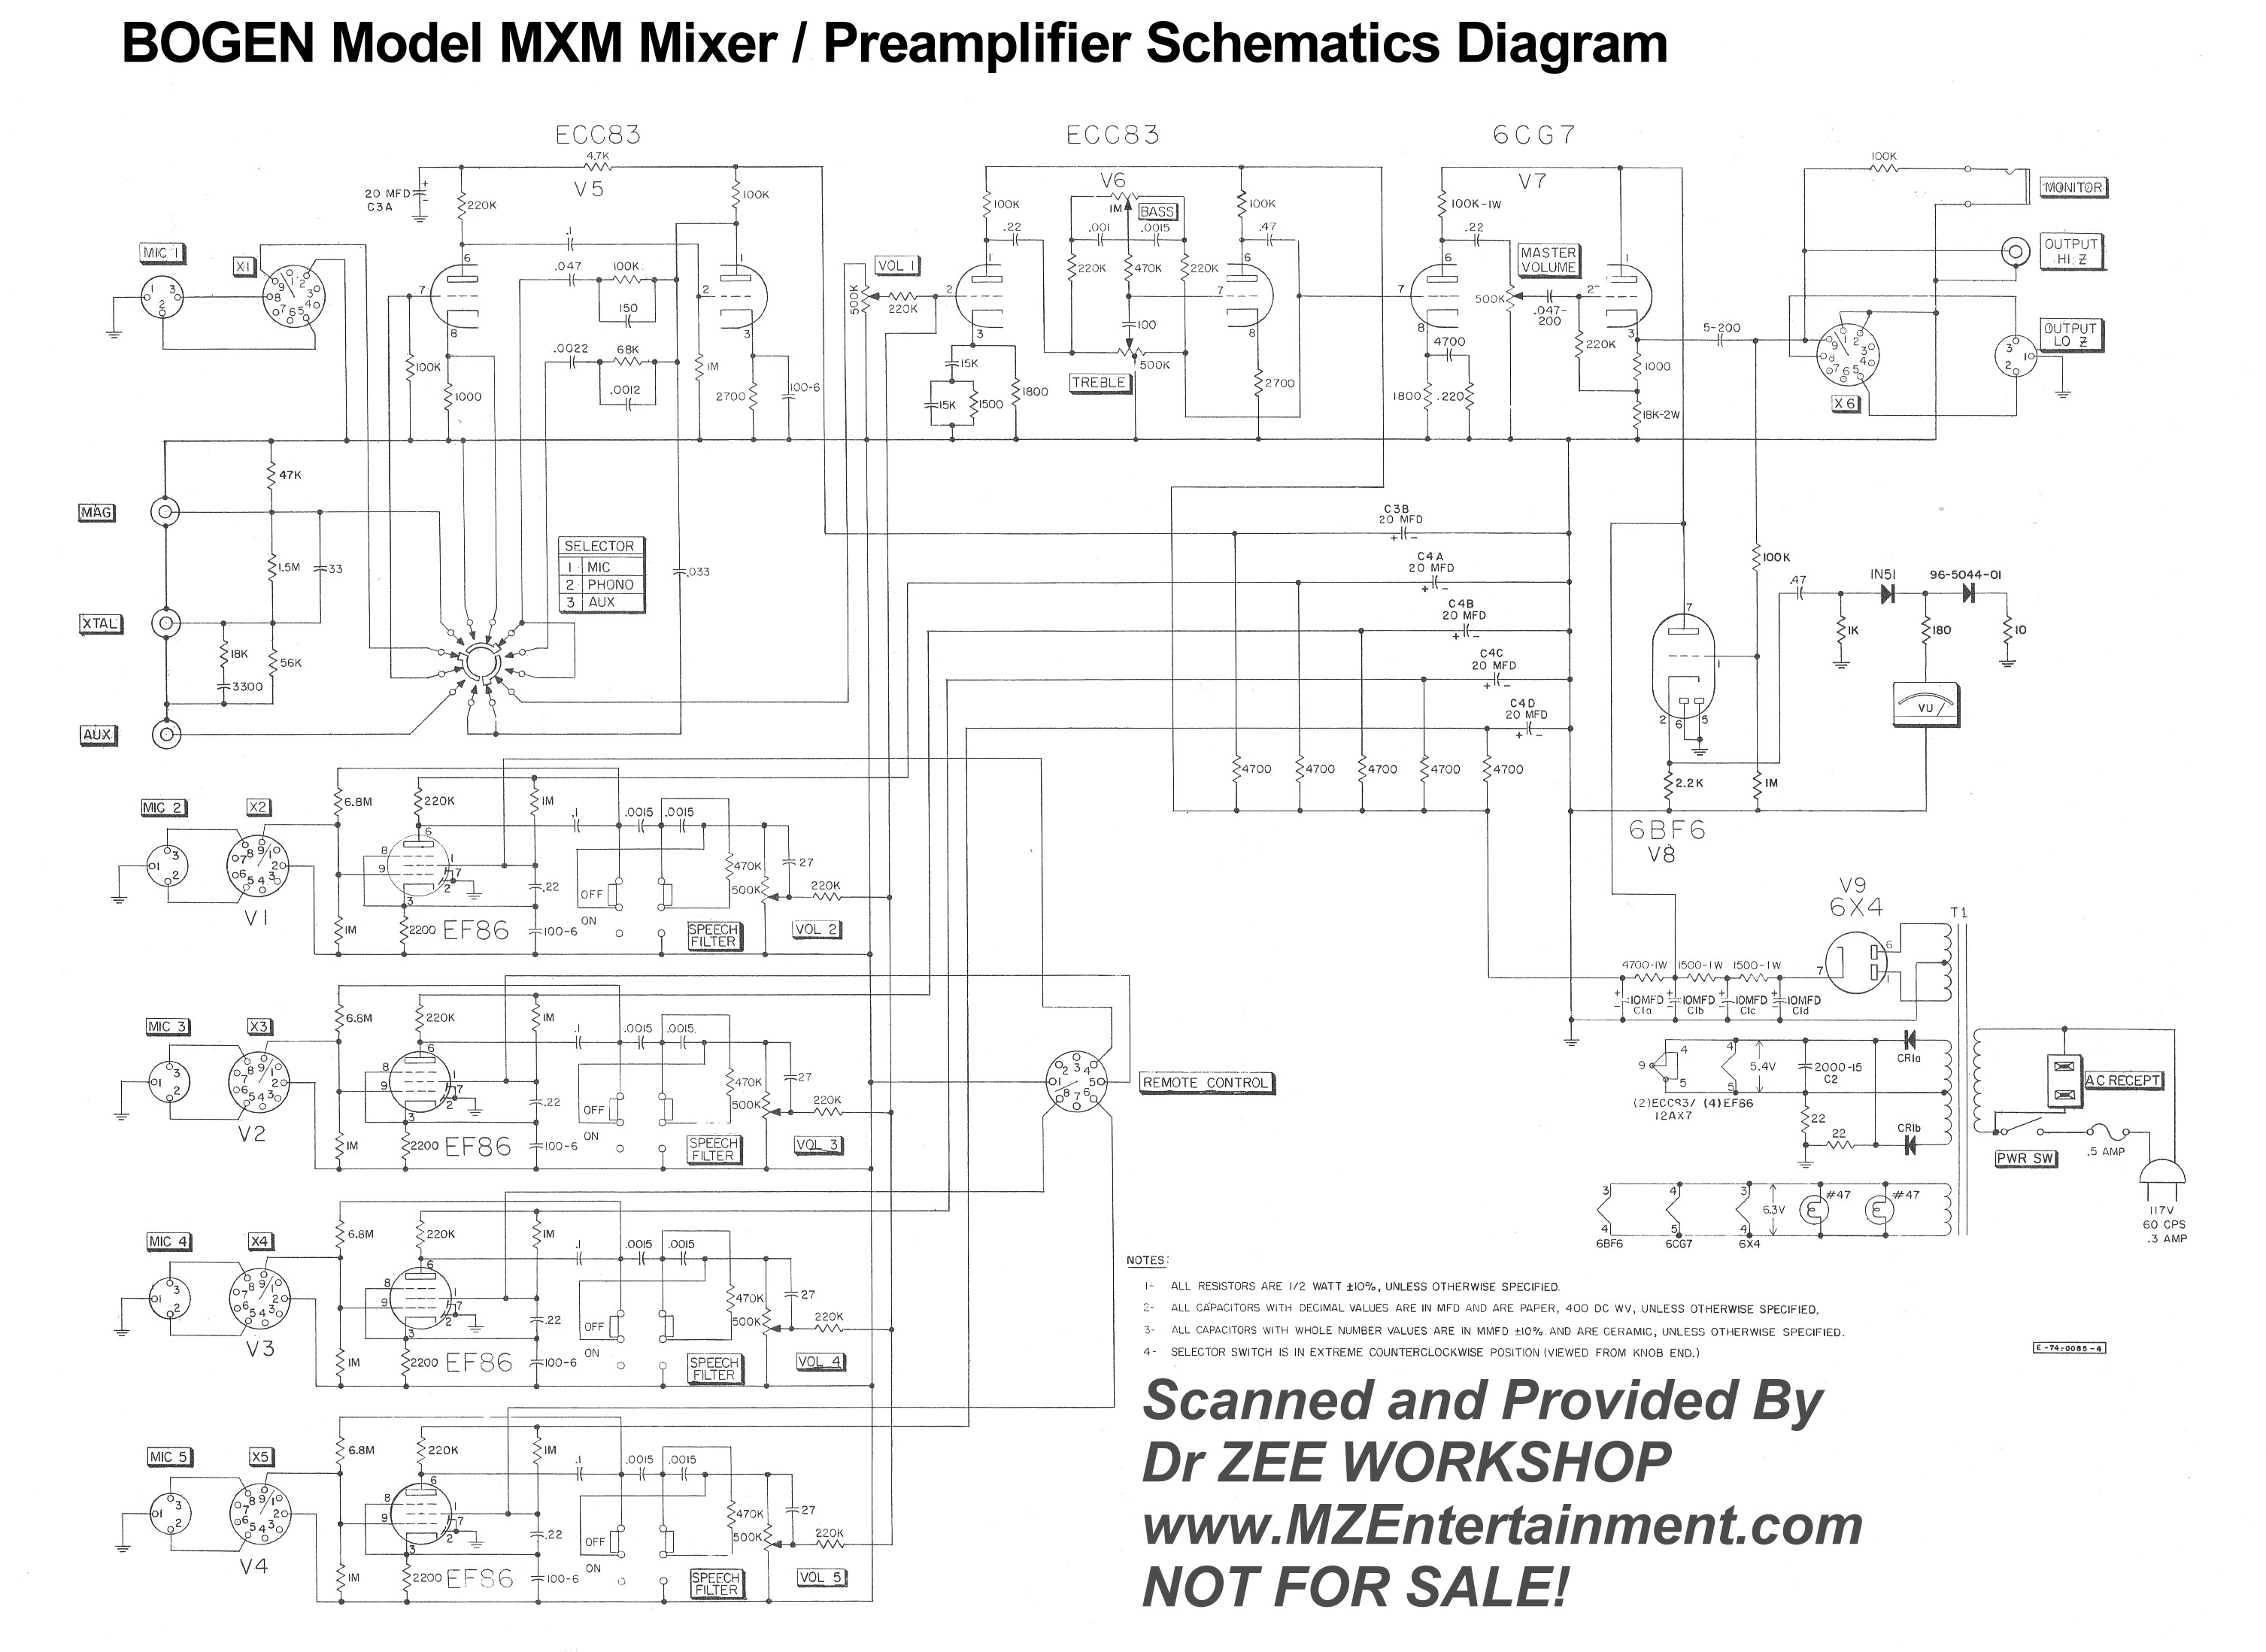 UNIVOX CP 110 Substituting Sections of SAJ210 SAJ110 IC DIAGRAM HOME AUDIO EQUIPMENT ZENITH model 7S682 Schematics Diagram [ ]